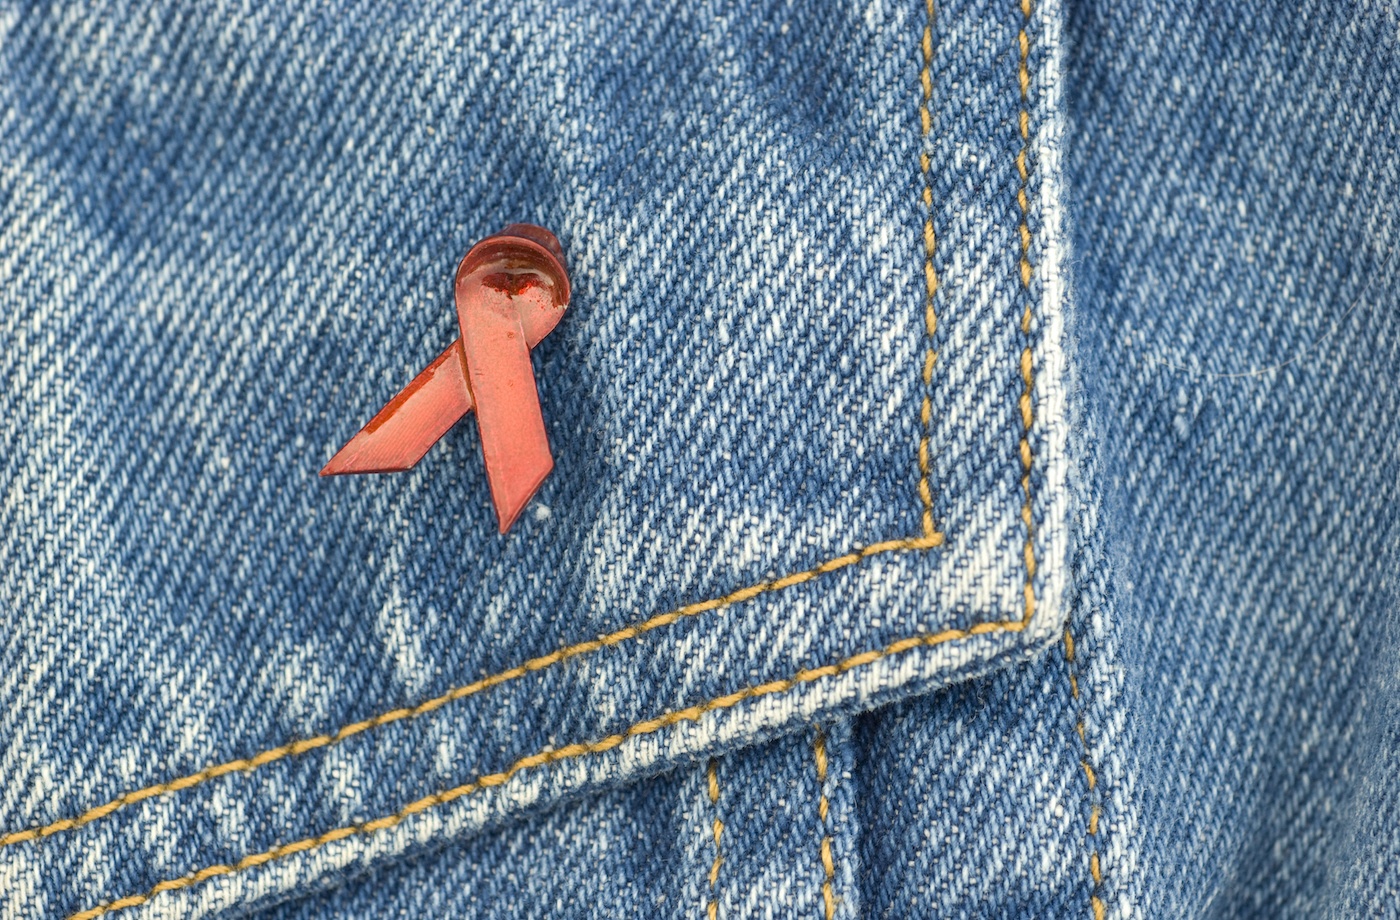 hiv aids awareness pin on denim jacket